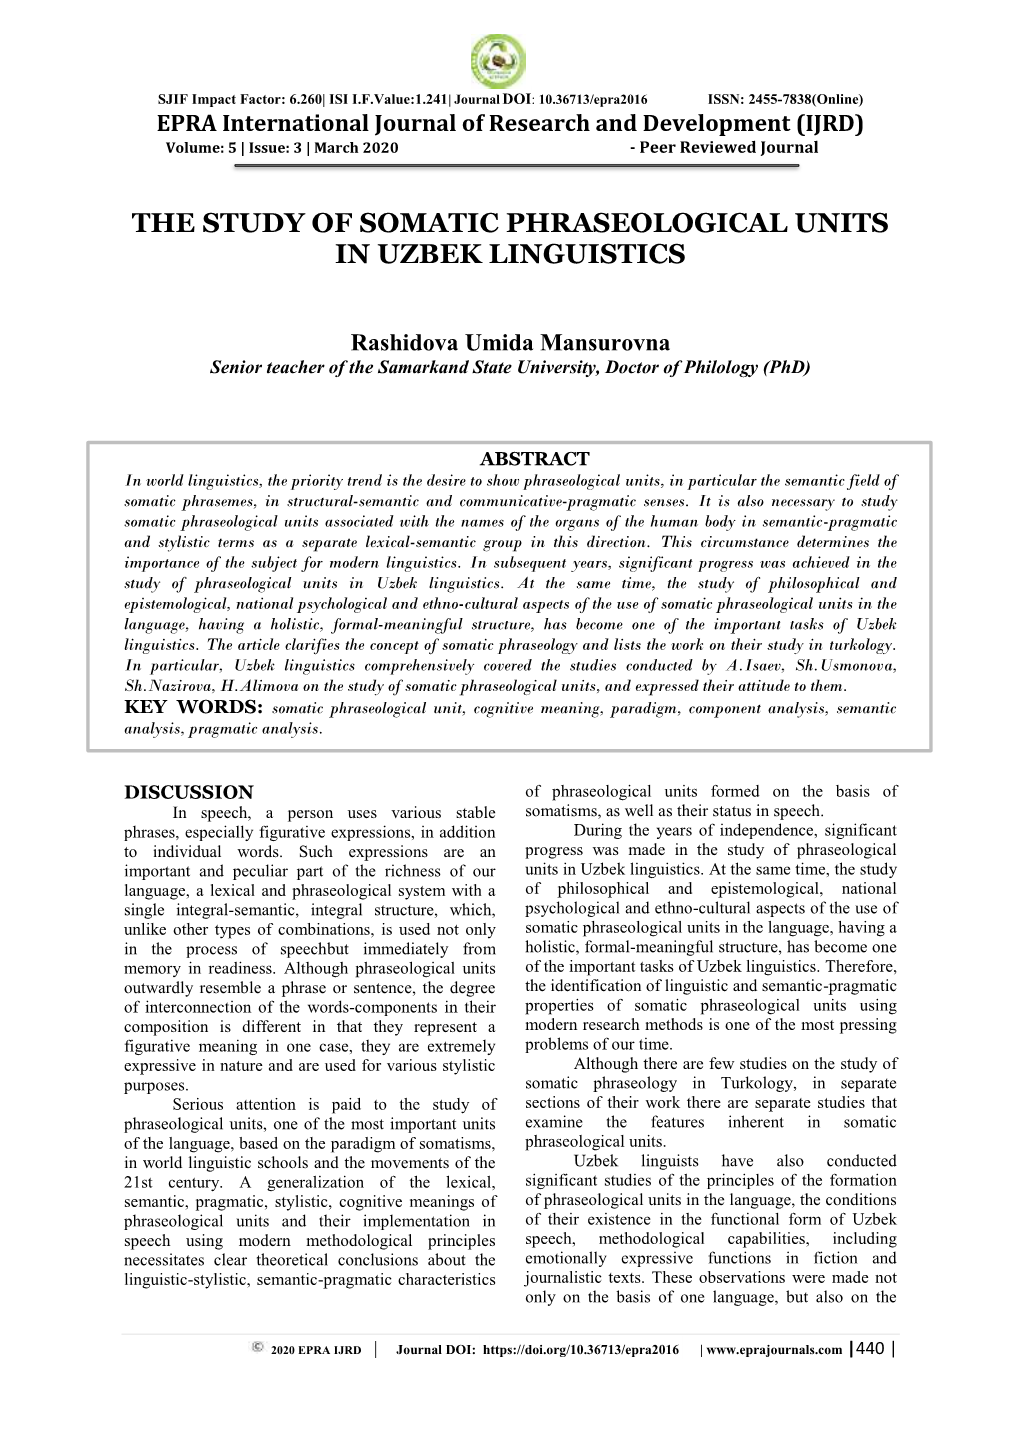 The Study of Somatic Phraseological Units in Uzbek Linguistics